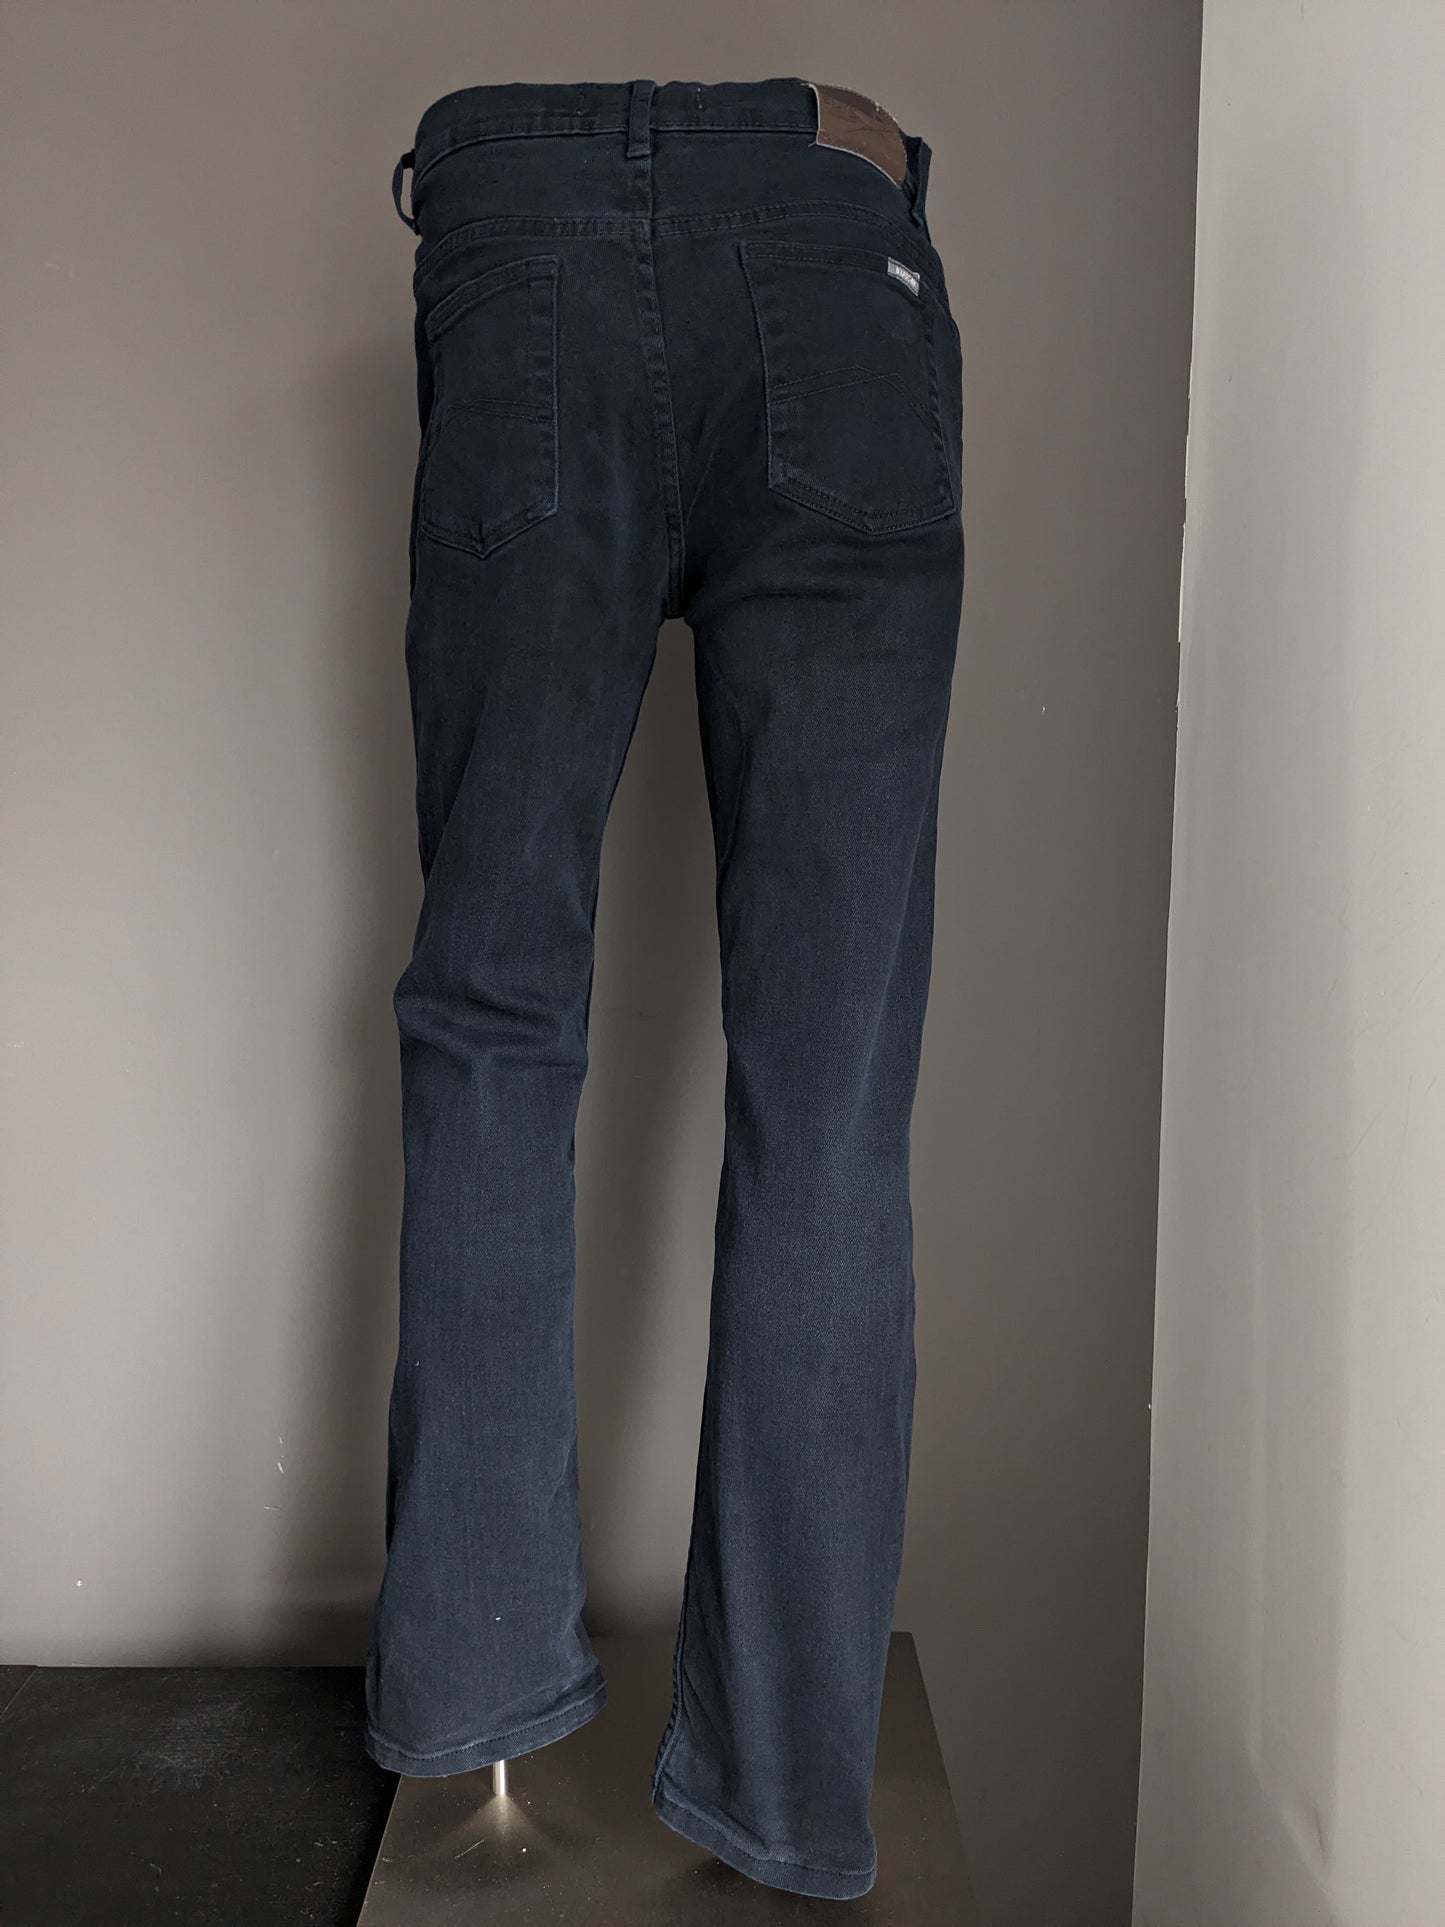 B Basic by Brams Paris jeans. Zwart gekleurd. Maat W34 - L34. Comfort Fit. stretch.